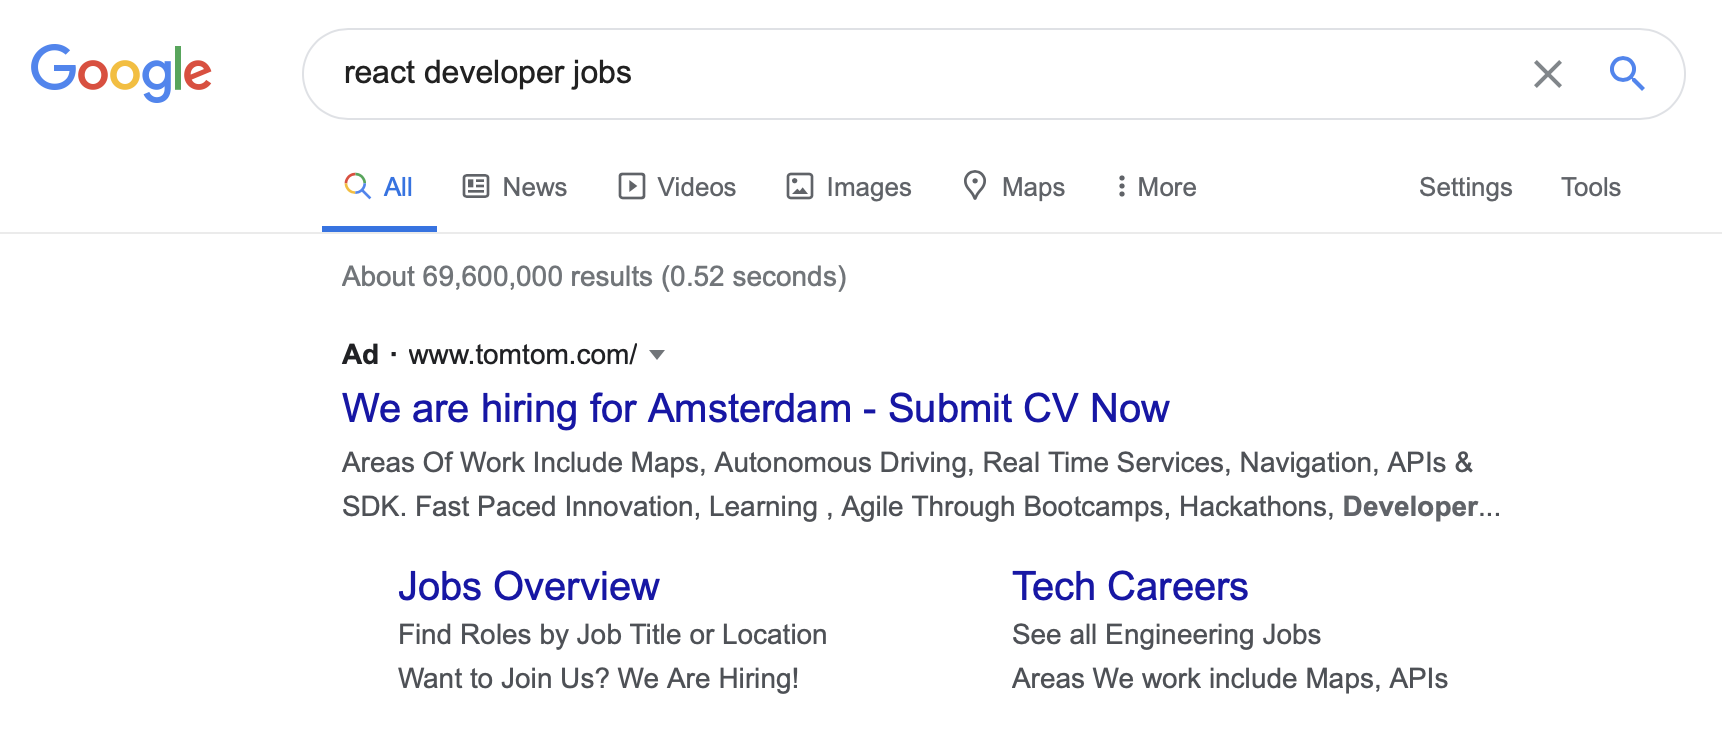 React Developer Jobs Google Ad